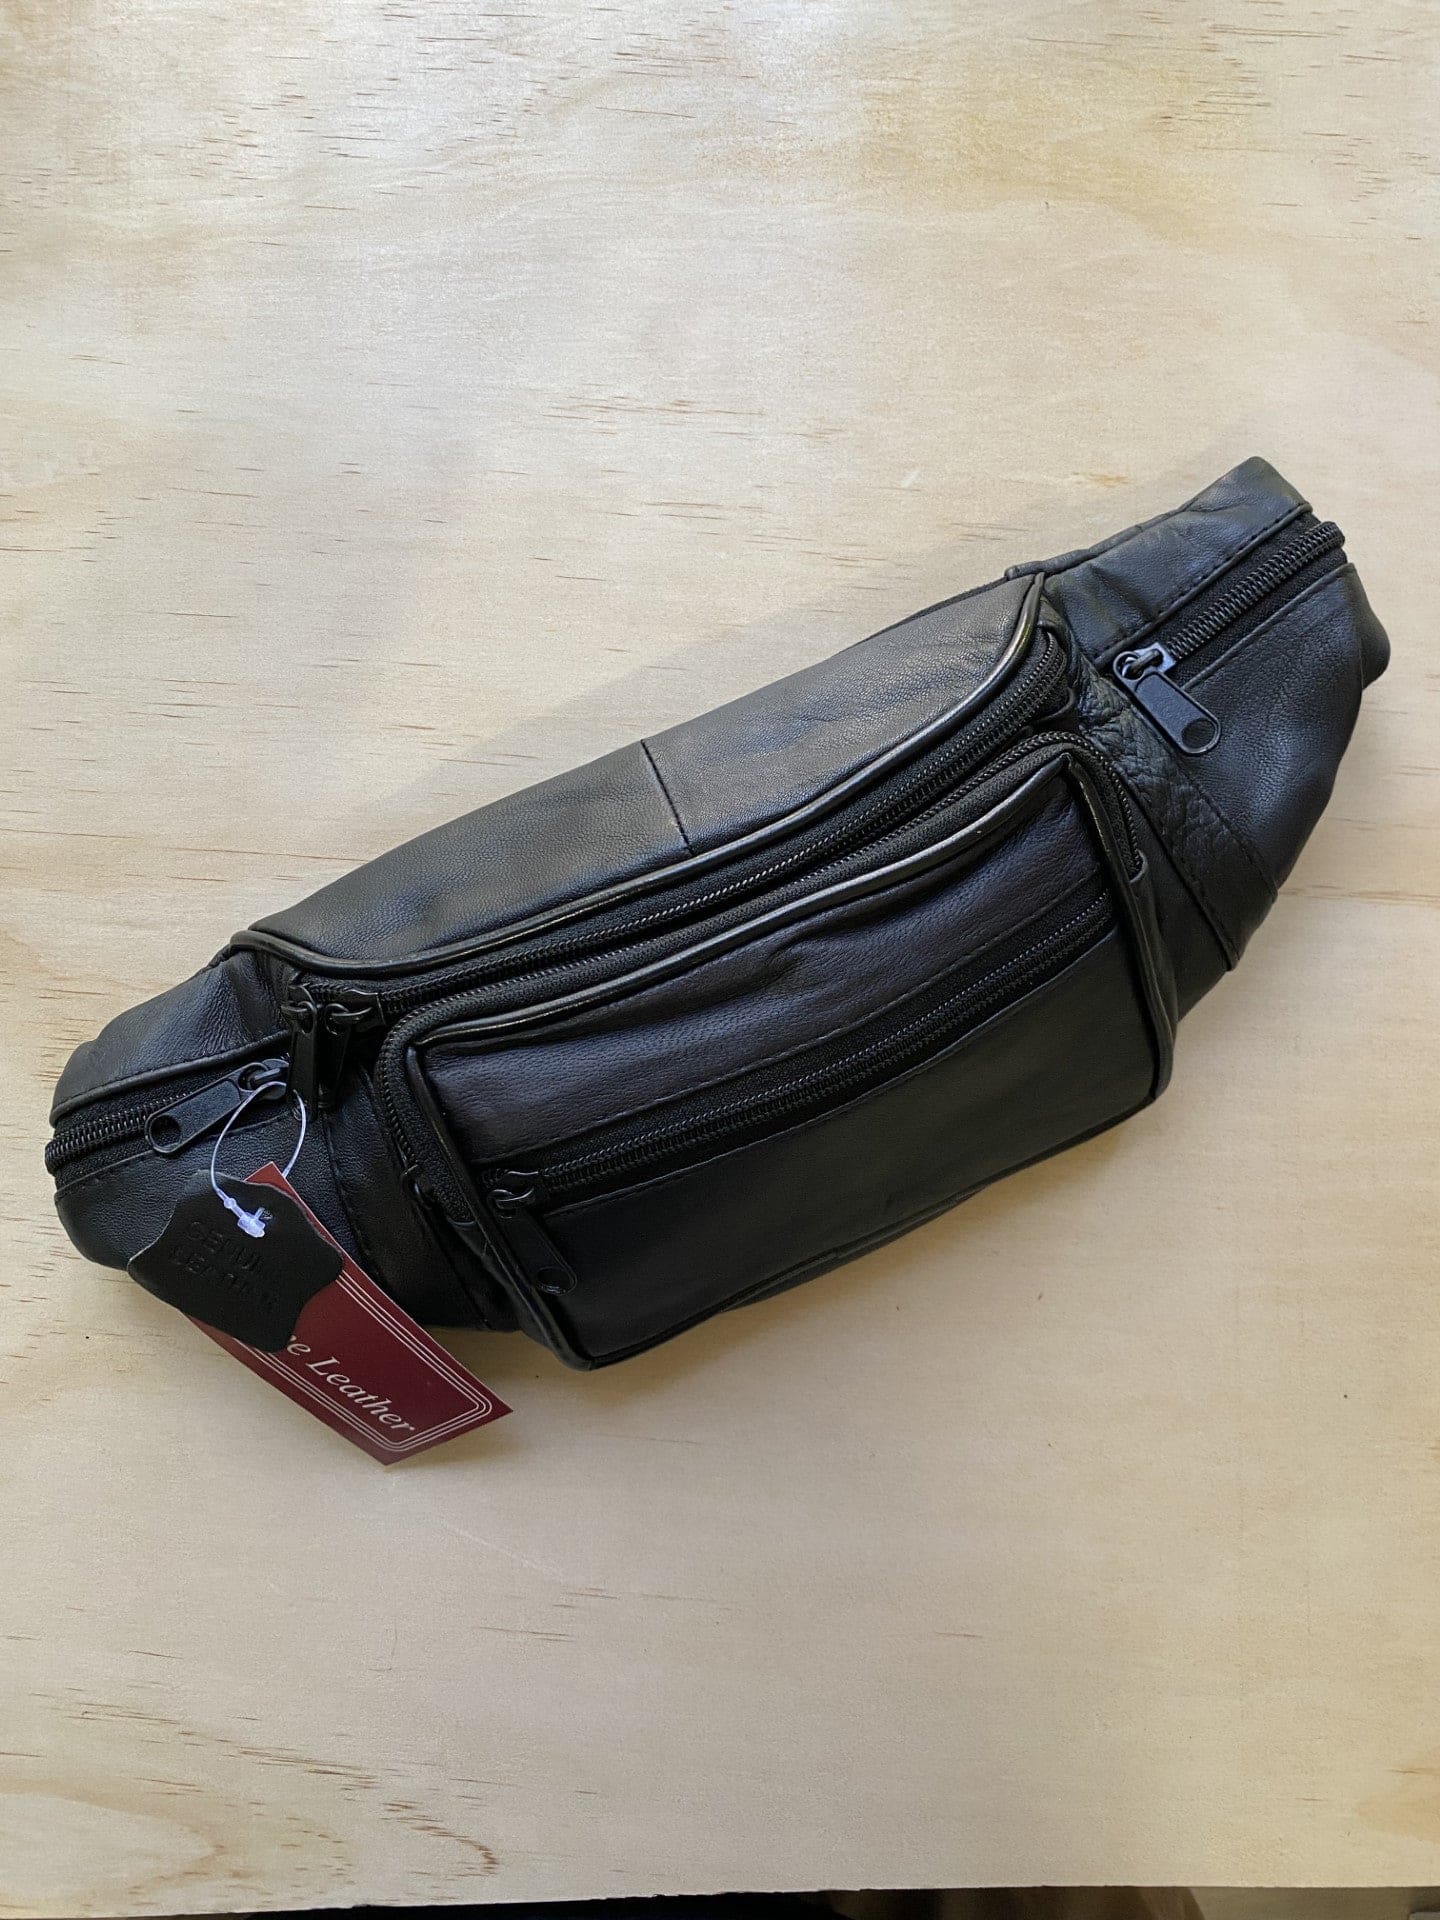 Men's Leather Fanny Pack, Waist Bag for Festivals and Daily Use, Black Belt Bag - KALGHI LEATHER